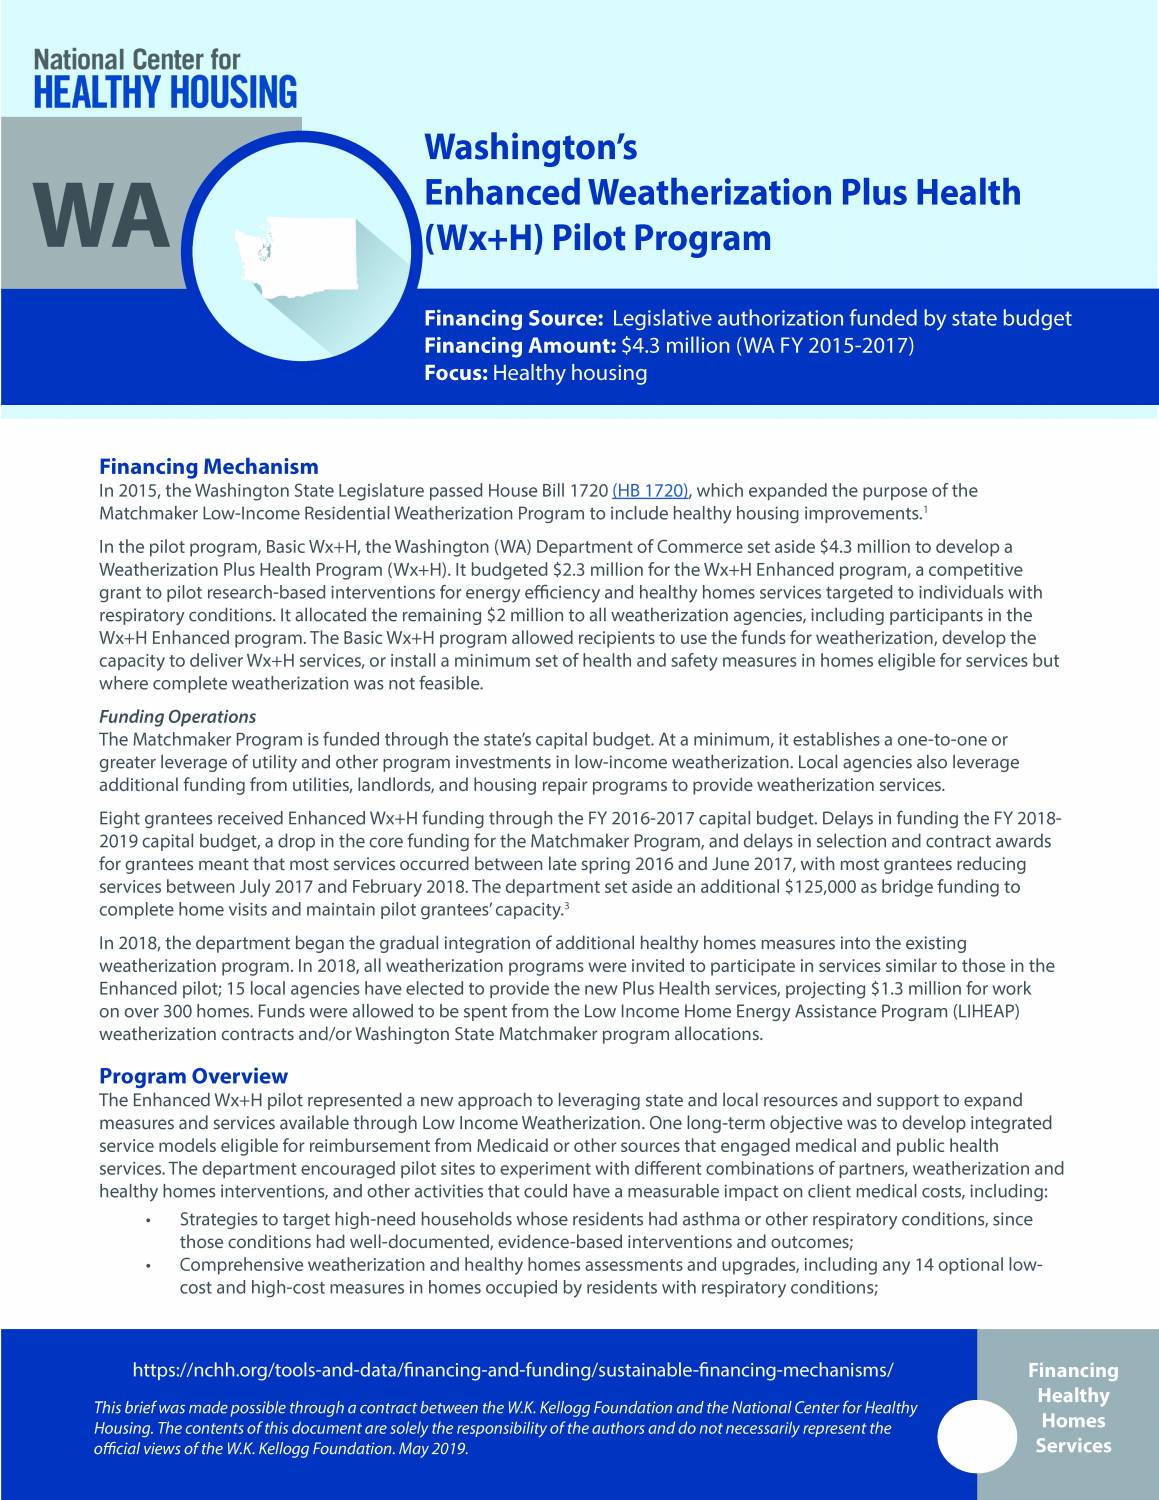 Sustainable Financing Mechanisms – Washington's Enhanced Weatherization Plus Health Pilot Program